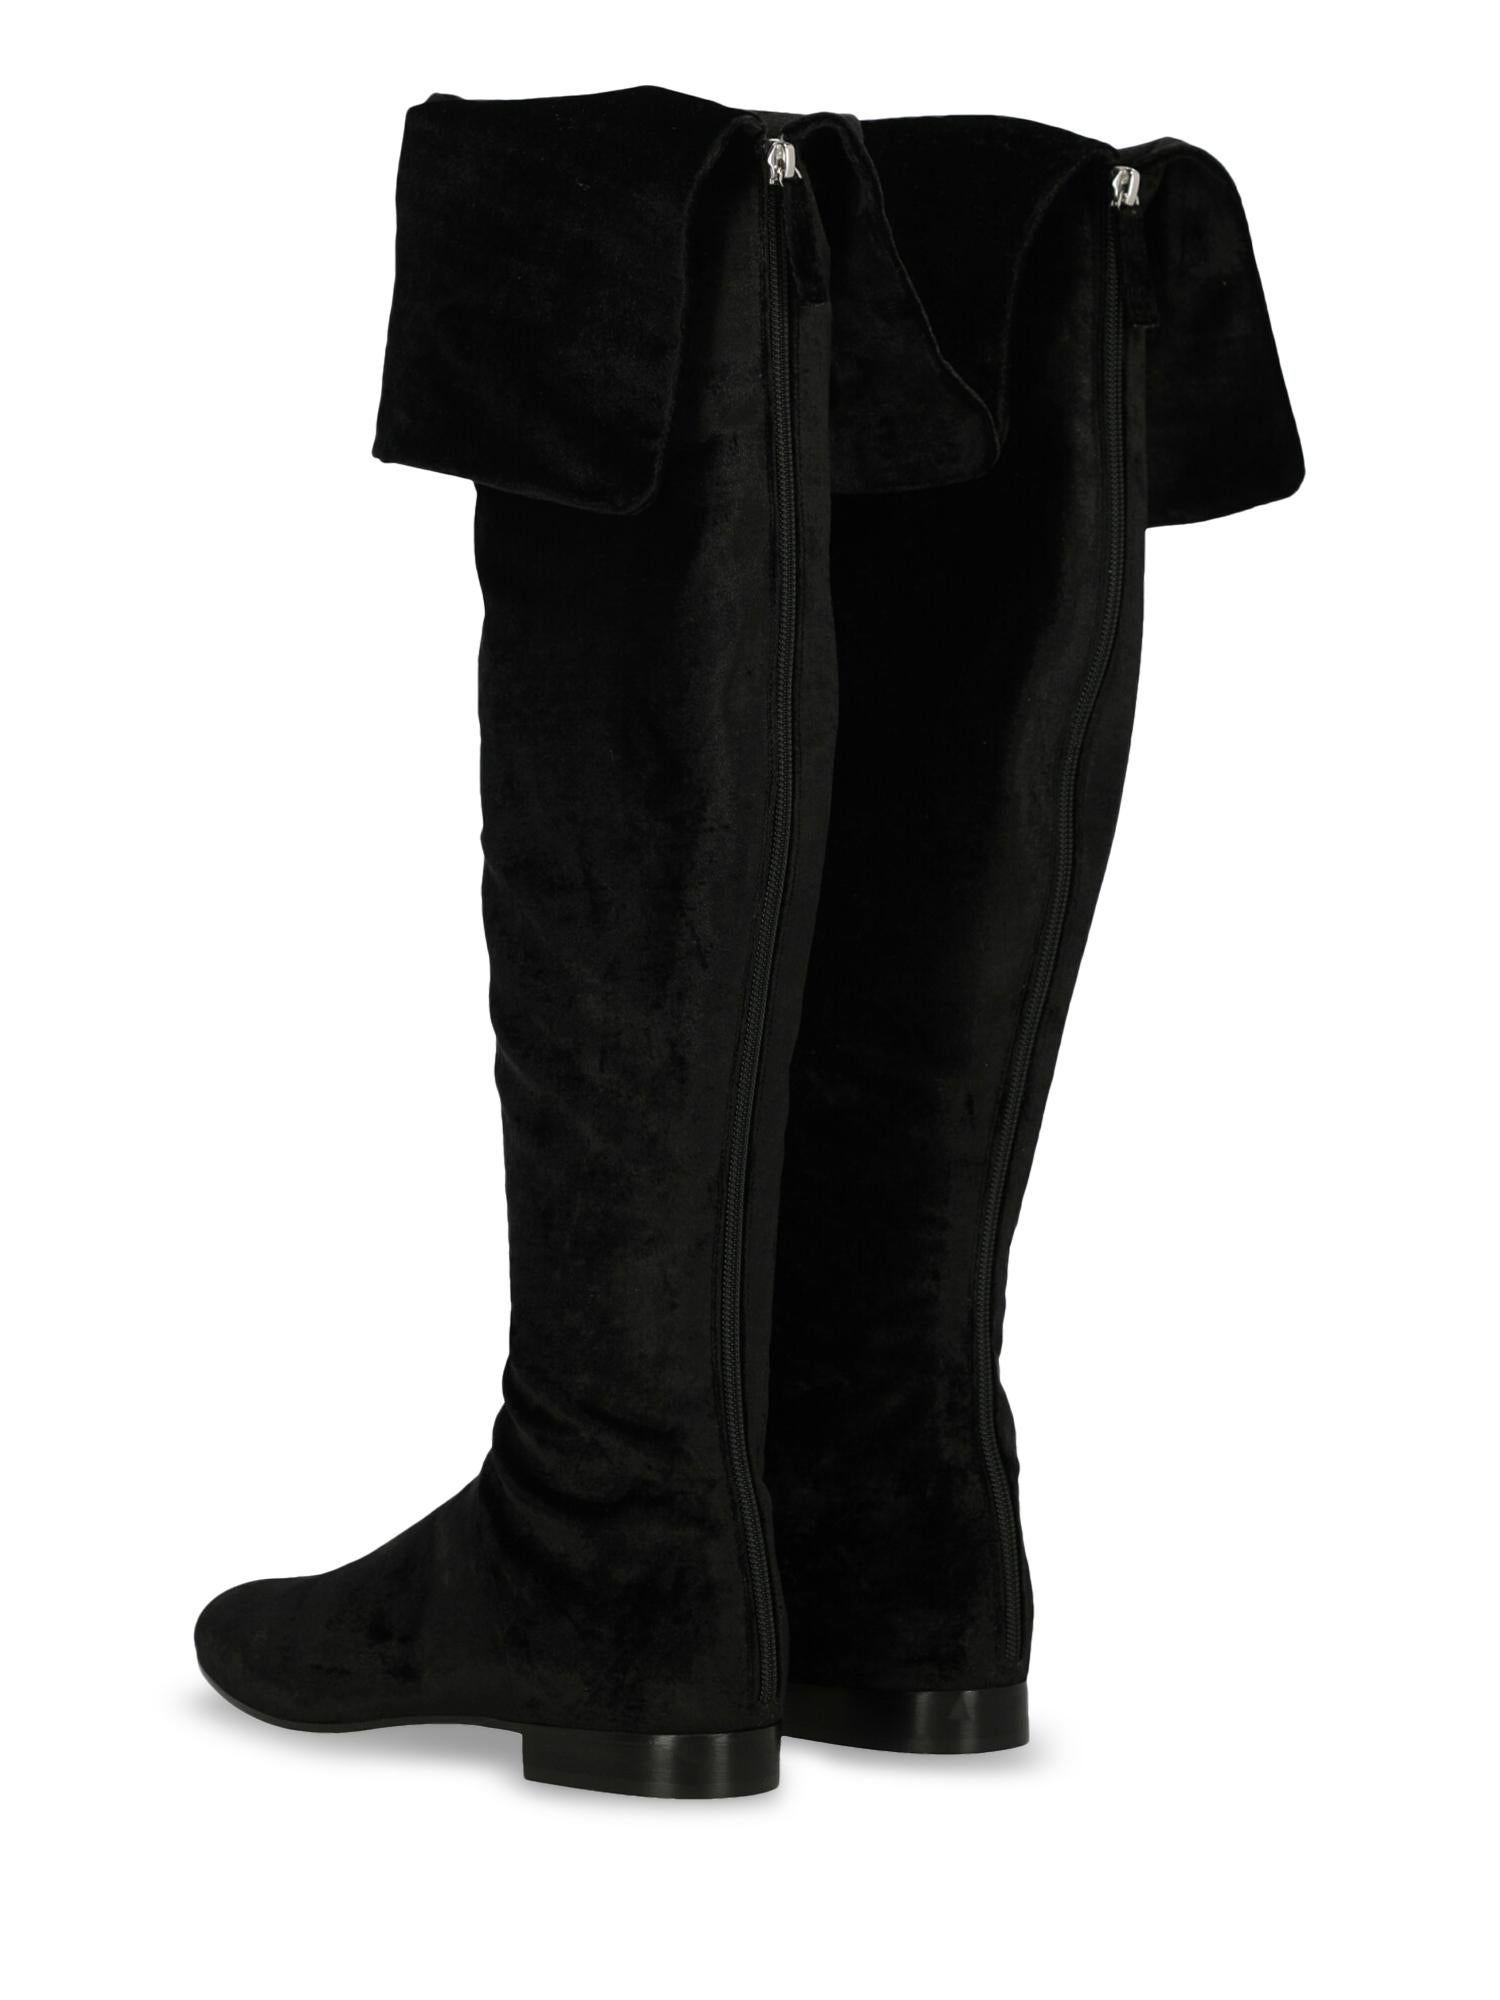 Women's Alberta Ferretti Woman Boots Black Fabric IT 36 For Sale